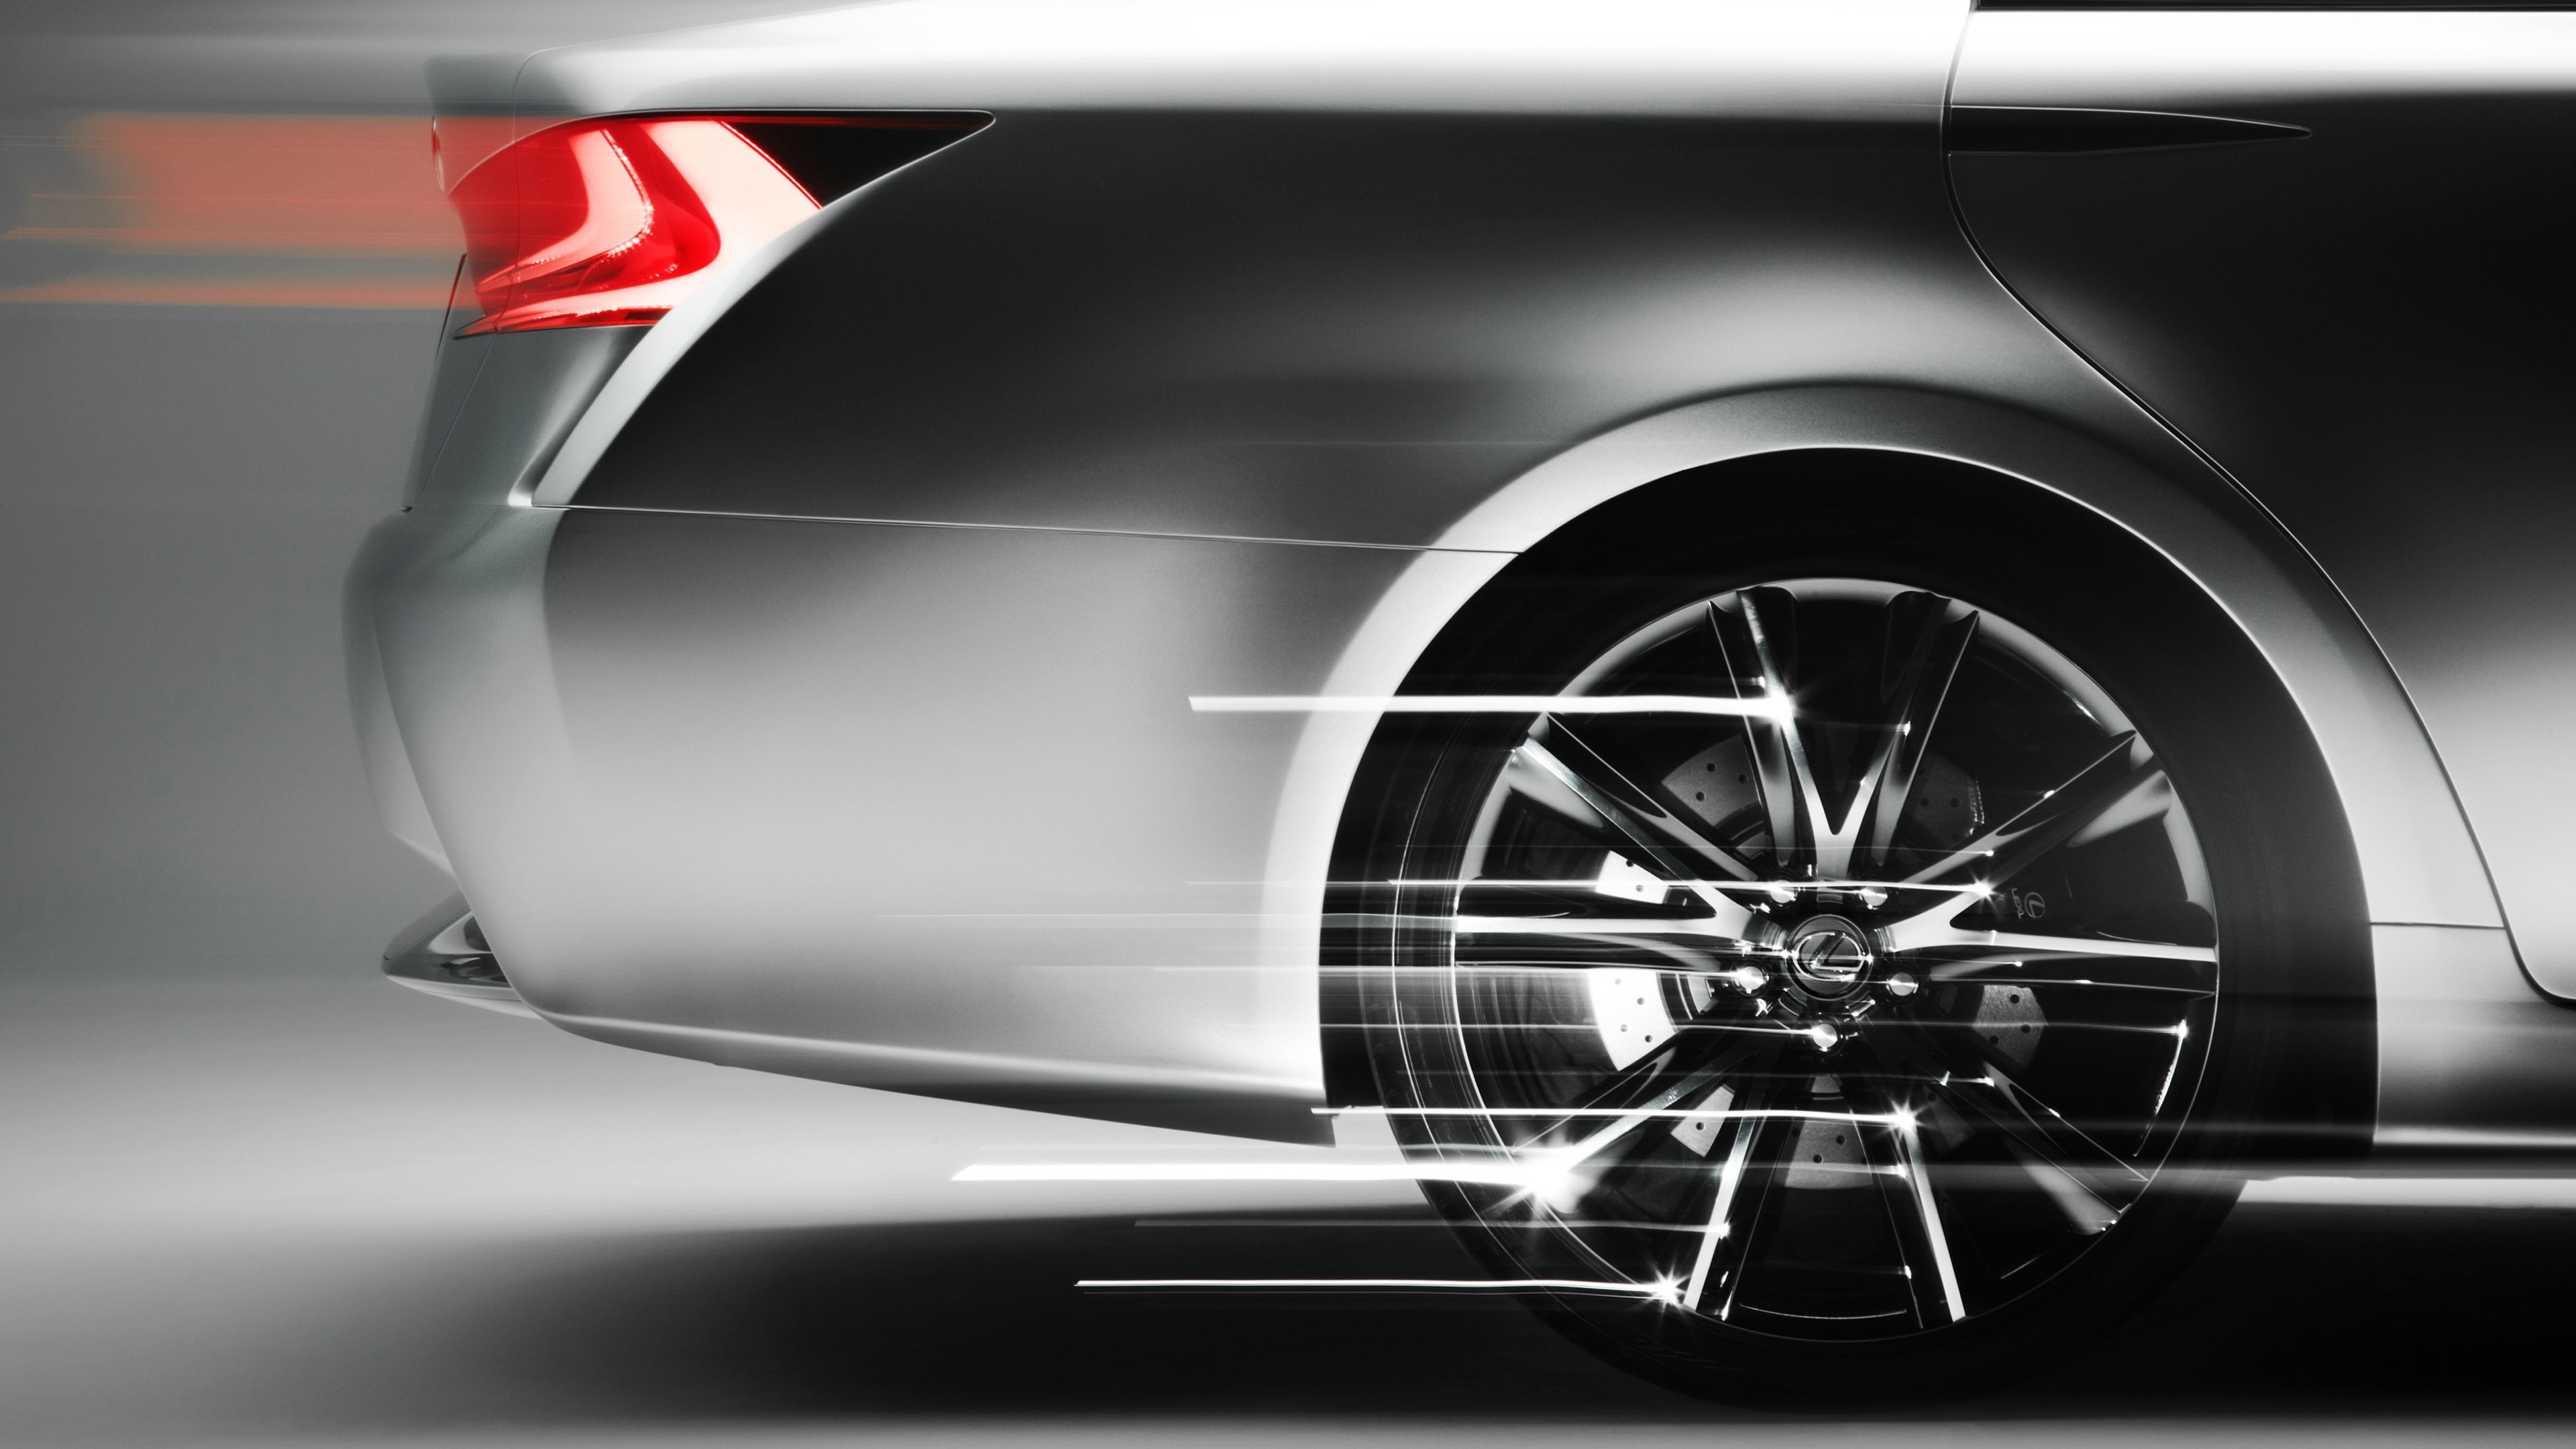 Lexus LF-GH Concept for 3840 x 2160 Ultra HD resolution